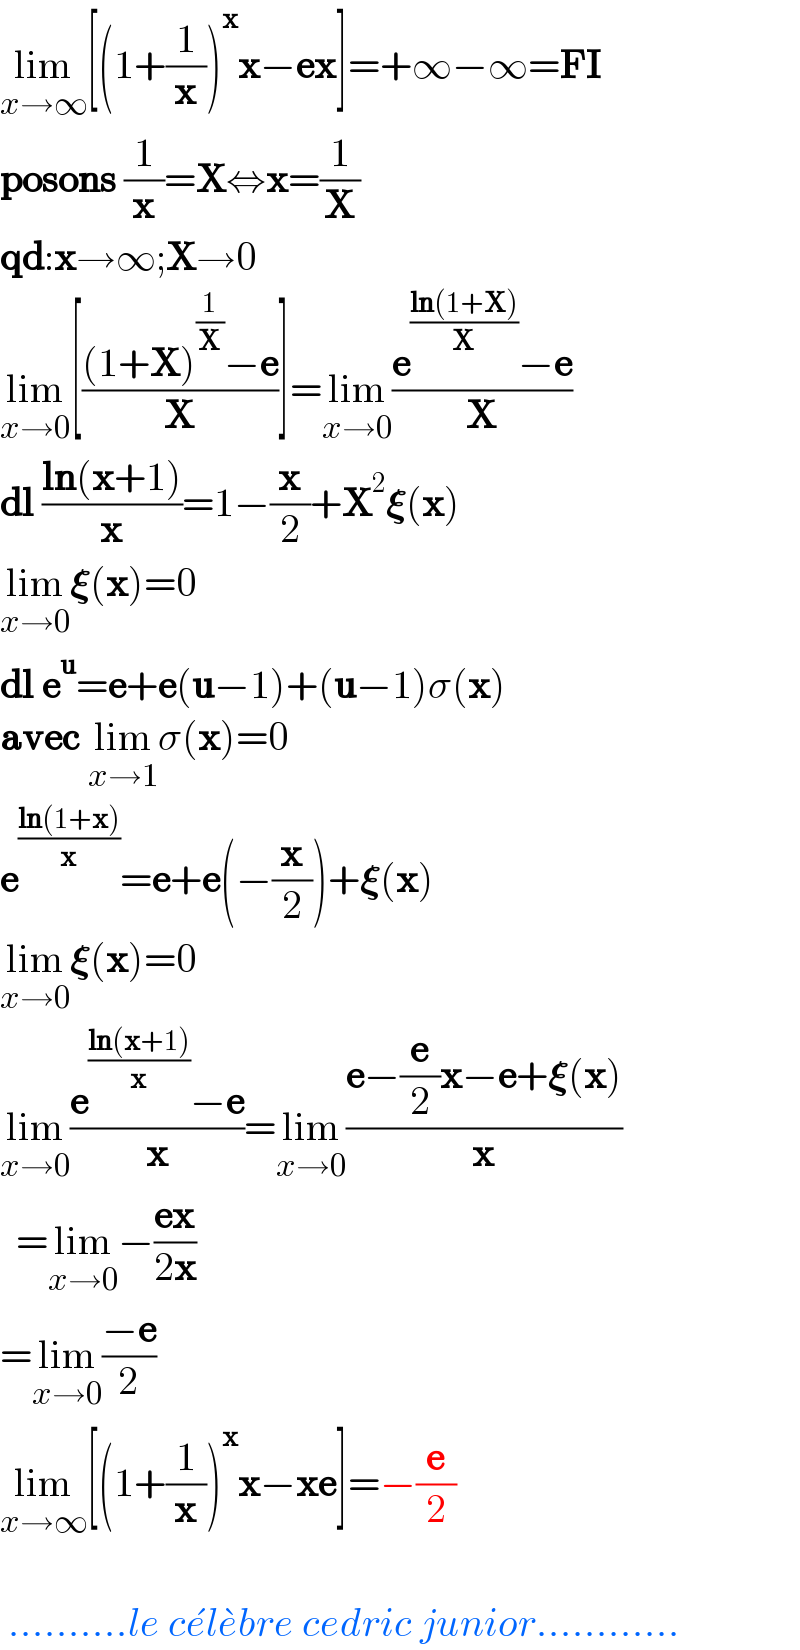 lim_(x→∞) [(1+(1/x))^x x−ex]=+∞−∞=FI  posons (1/x)=X⇔x=(1/X)  qd:x→∞;X→0  lim_(x→0) [(((1+X)^(1/X) −e)/X)]=lim_(x→0) ((e^((ln(1+X))/X) −e)/X)  dl ((ln(x+1))/x)=1−(x/2)+X^2 𝛏(x)  lim_(x→0) 𝛏(x)=0  dl e^u =e+e(u−1)+(u−1)σ(x)  avec lim_(x→1) σ(x)=0  e^((ln(1+x))/x) =e+e(−(x/2))+𝛏(x)  lim_(x→0) 𝛏(x)=0  lim_(x→0) ((e^((ln(x+1))/x) −e)/x)=lim_(x→0) ((e−(e/2)x−e+𝛏(x))/x)    =lim_(x→0) −((ex)/(2x))  =lim_(x→0) ((−e)/2)  lim_(x→∞) [(1+(1/x))^x x−xe]=−(e/2)      ..........le ce^� le^� bre cedric junior............  